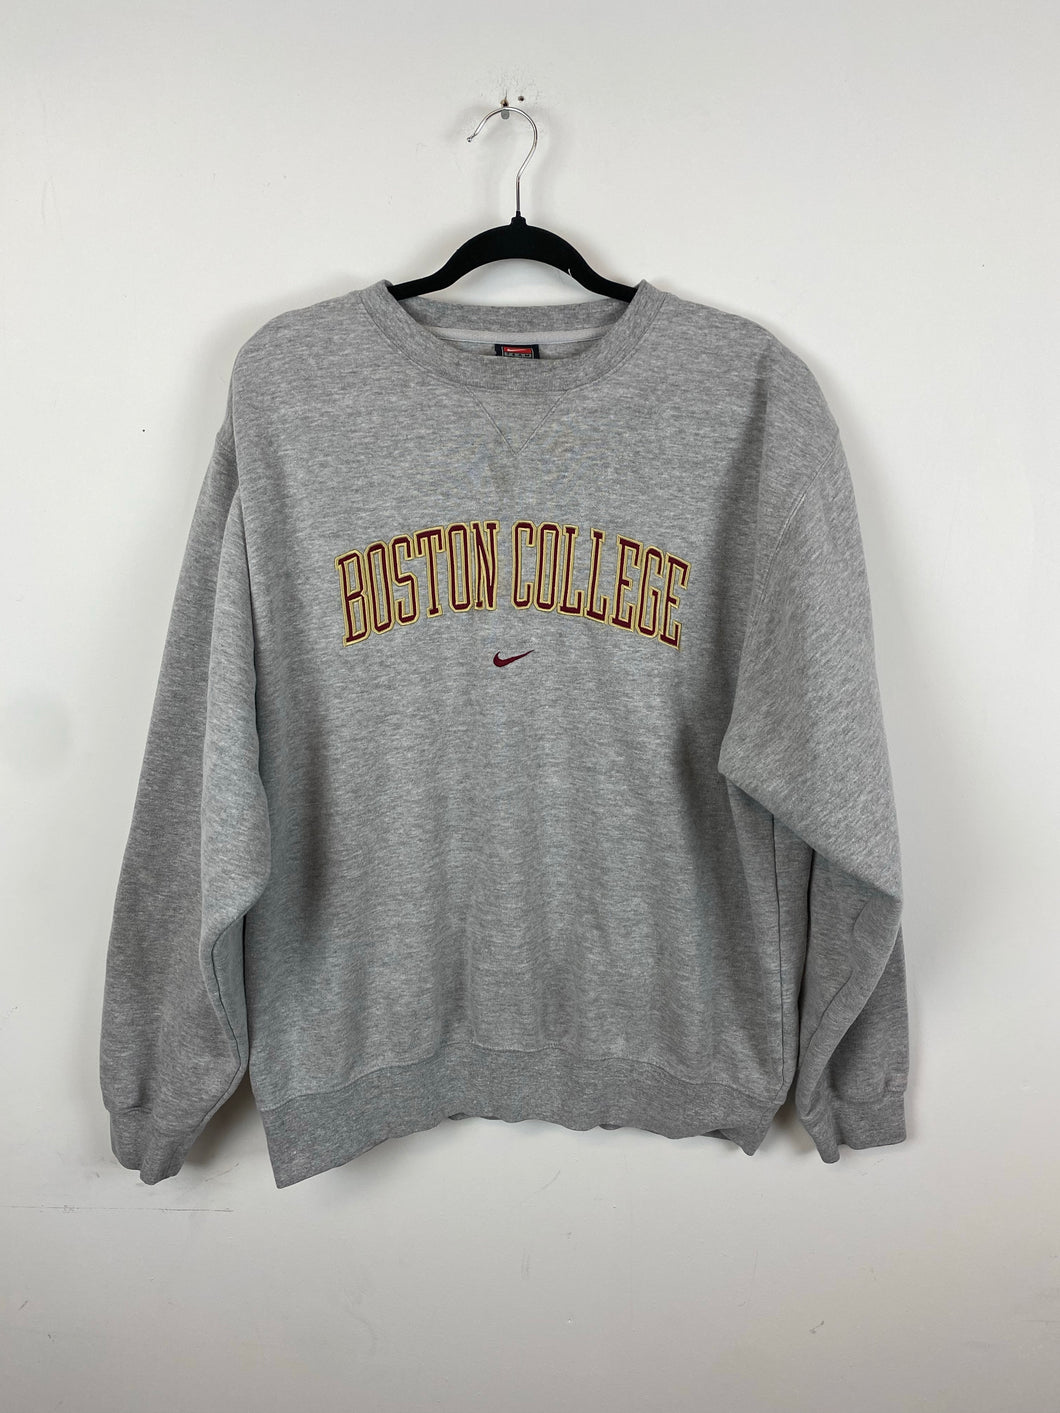 Boston college Nike crewneck - M/L